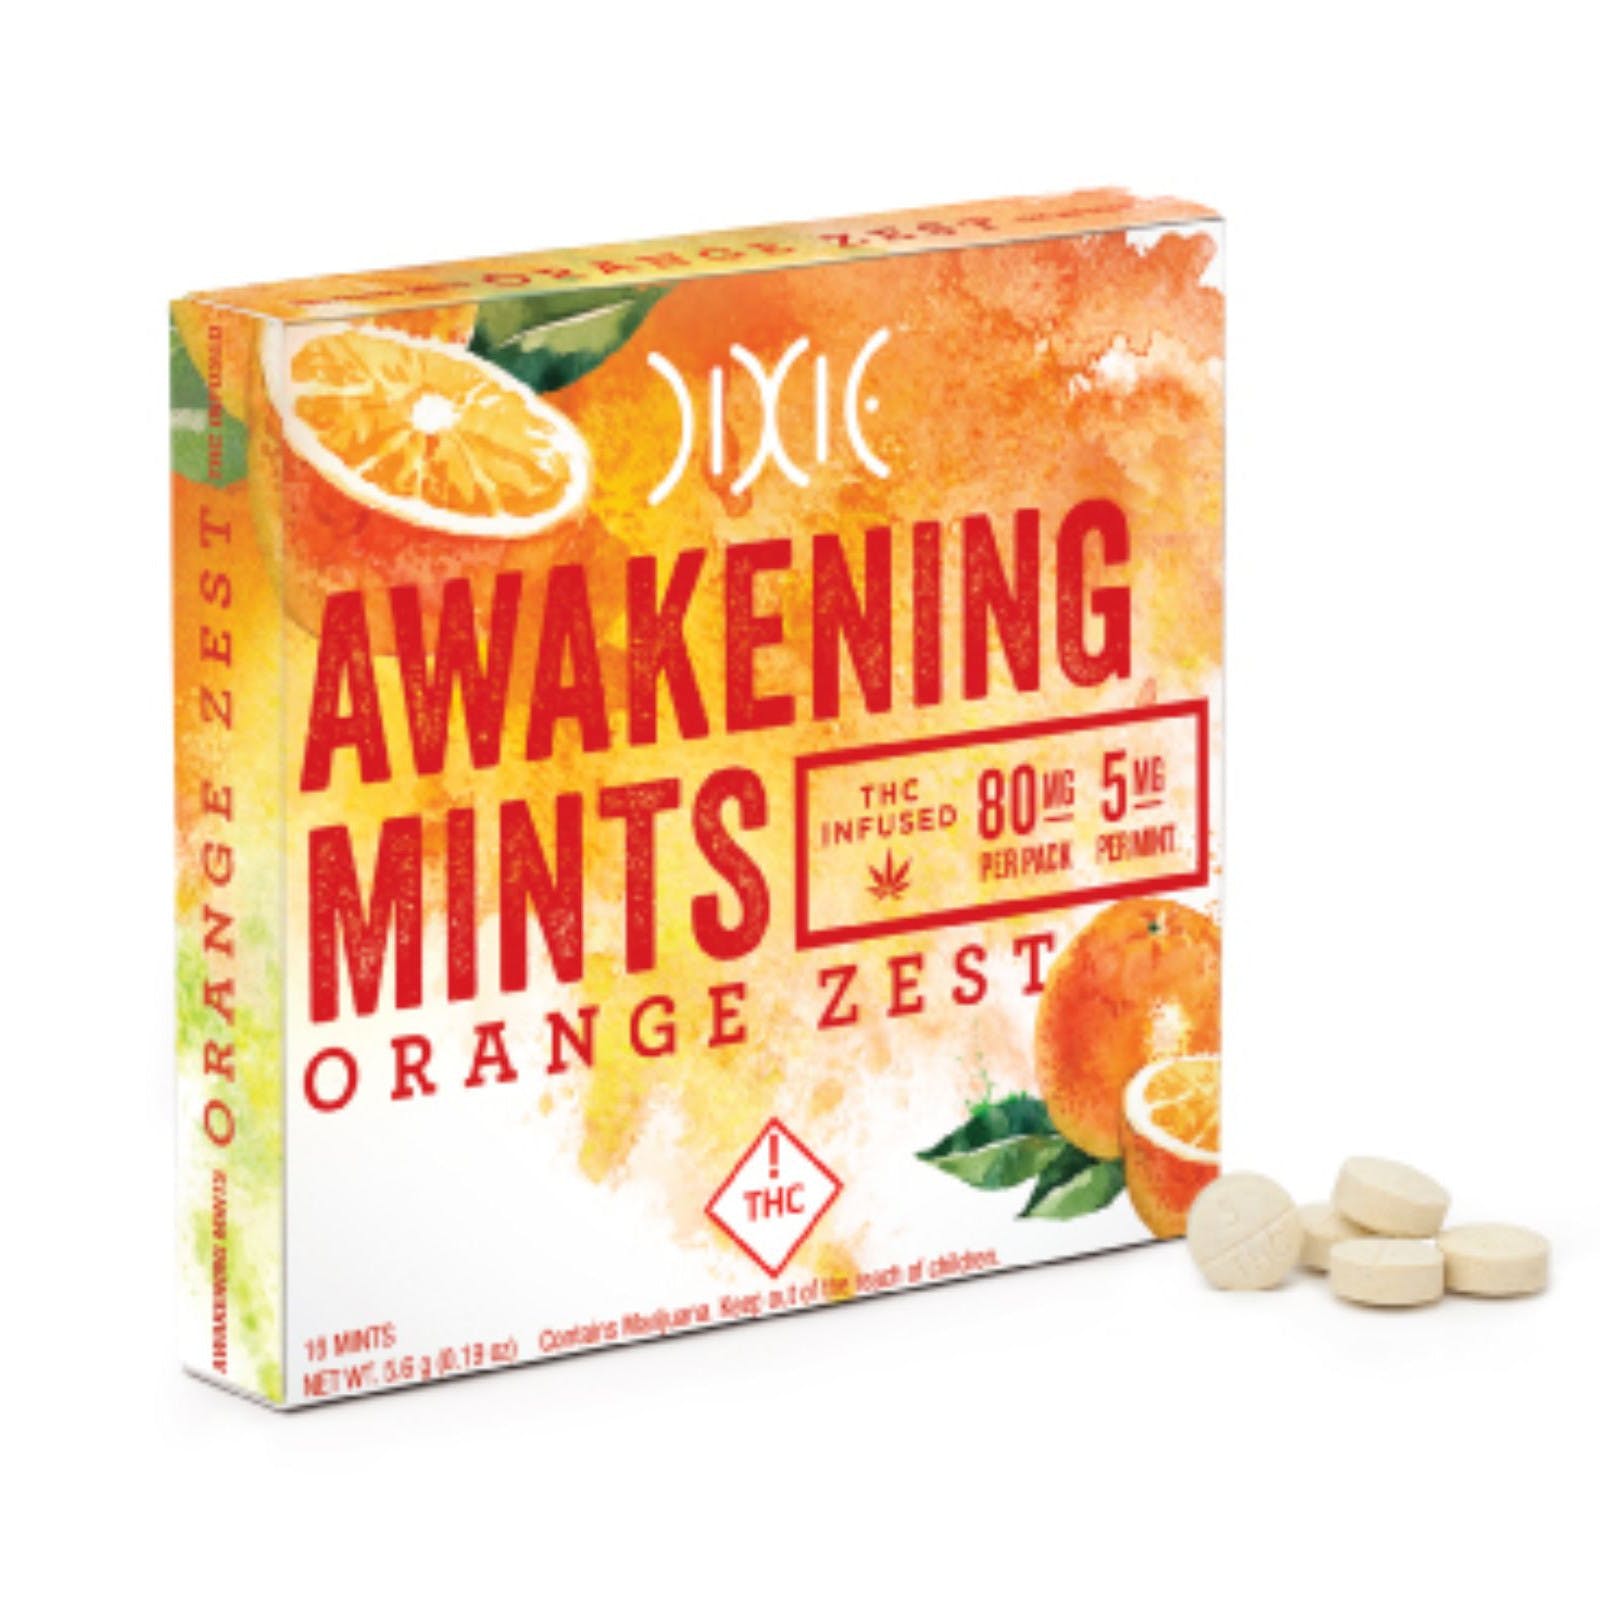 Dixie Awakening Mints - Orange Zest - 80mg THC